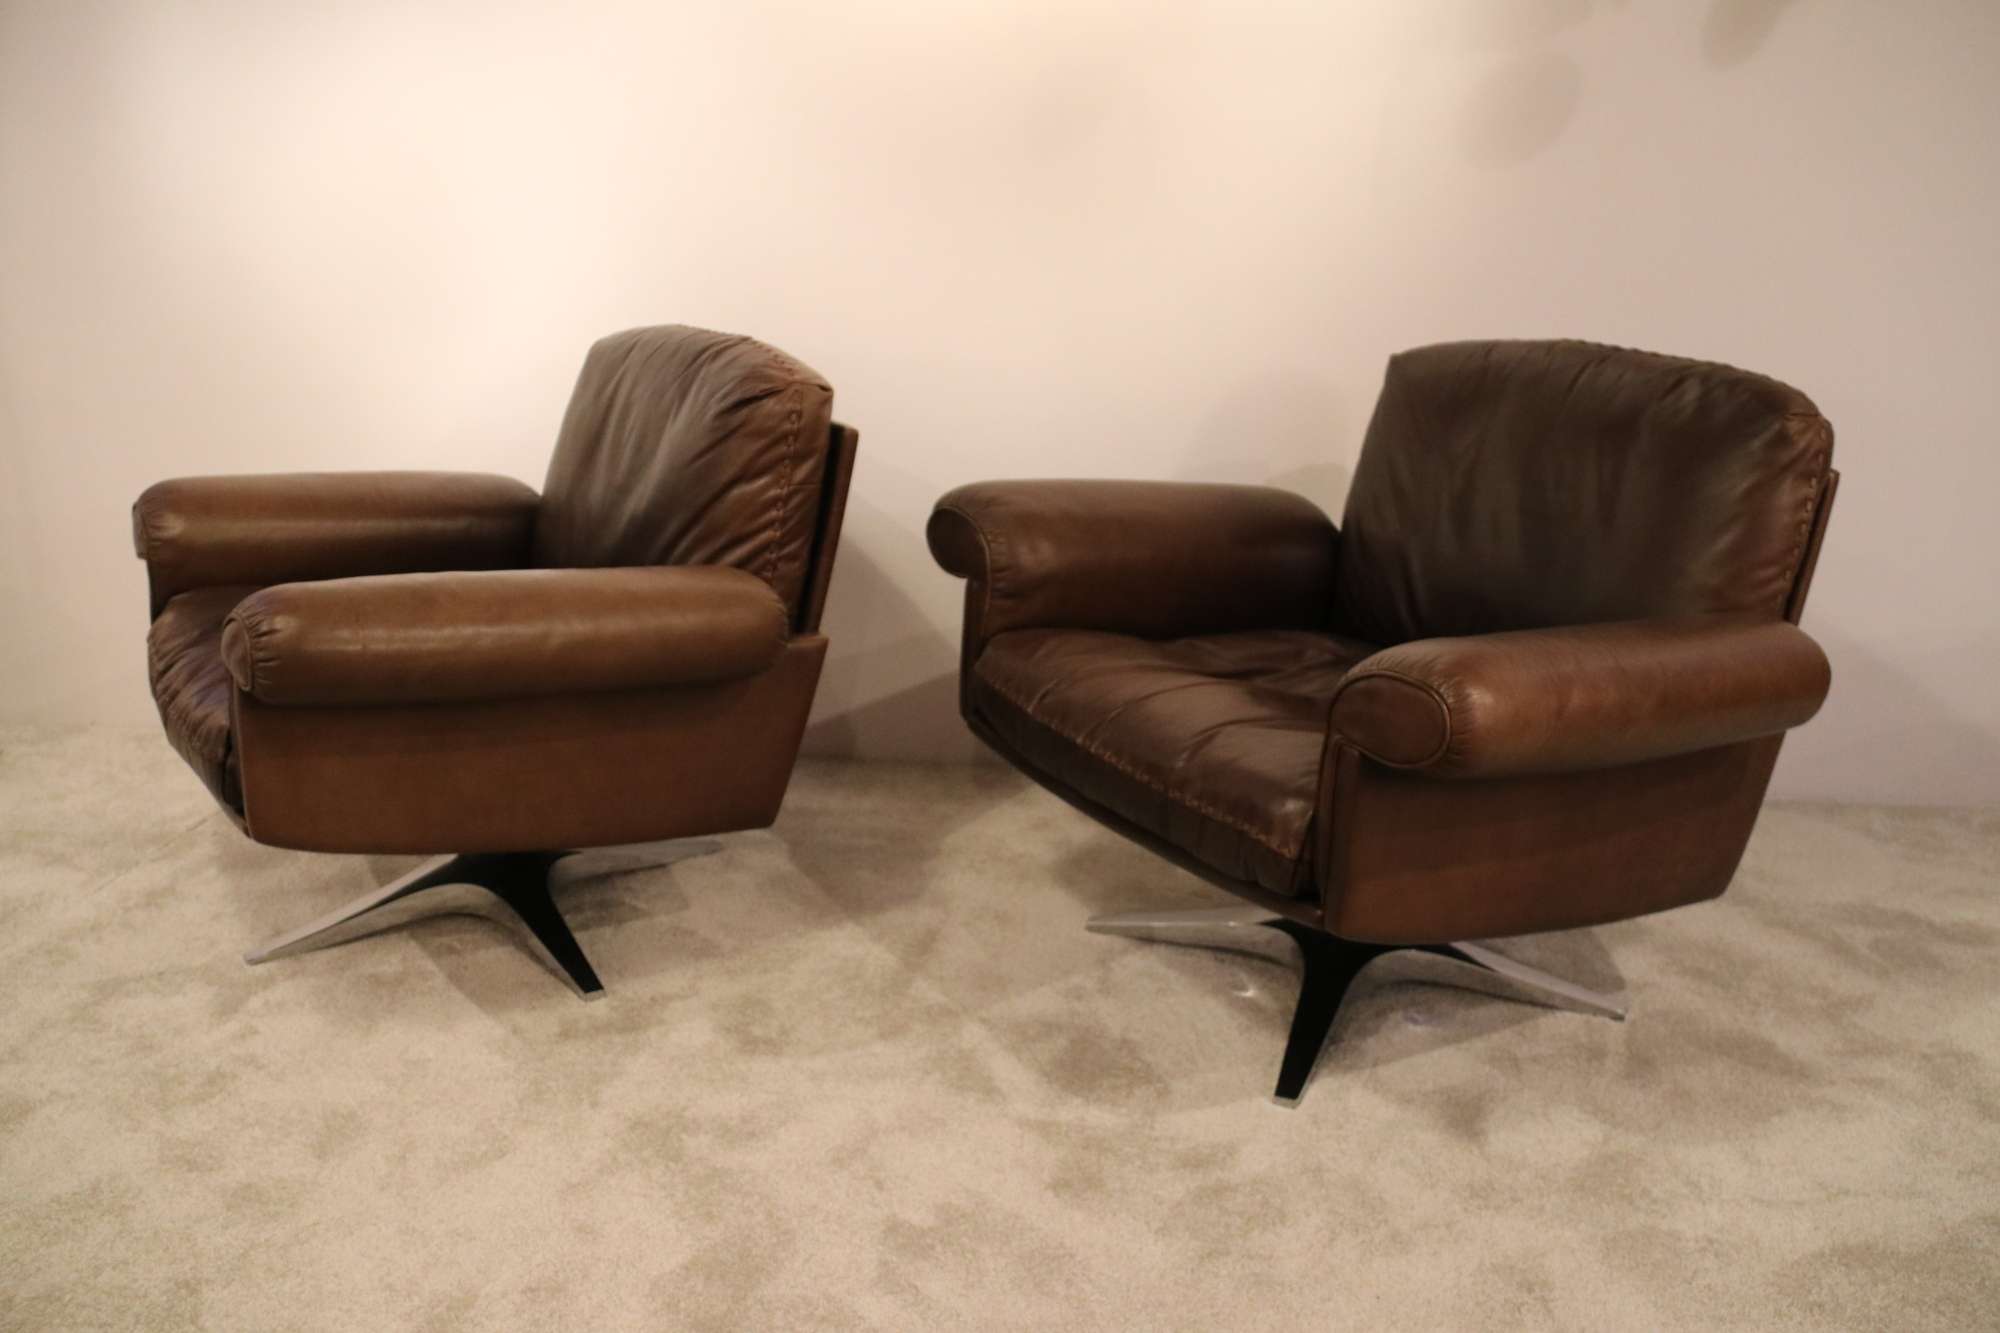 Vintage leather chair DS31 design (6)